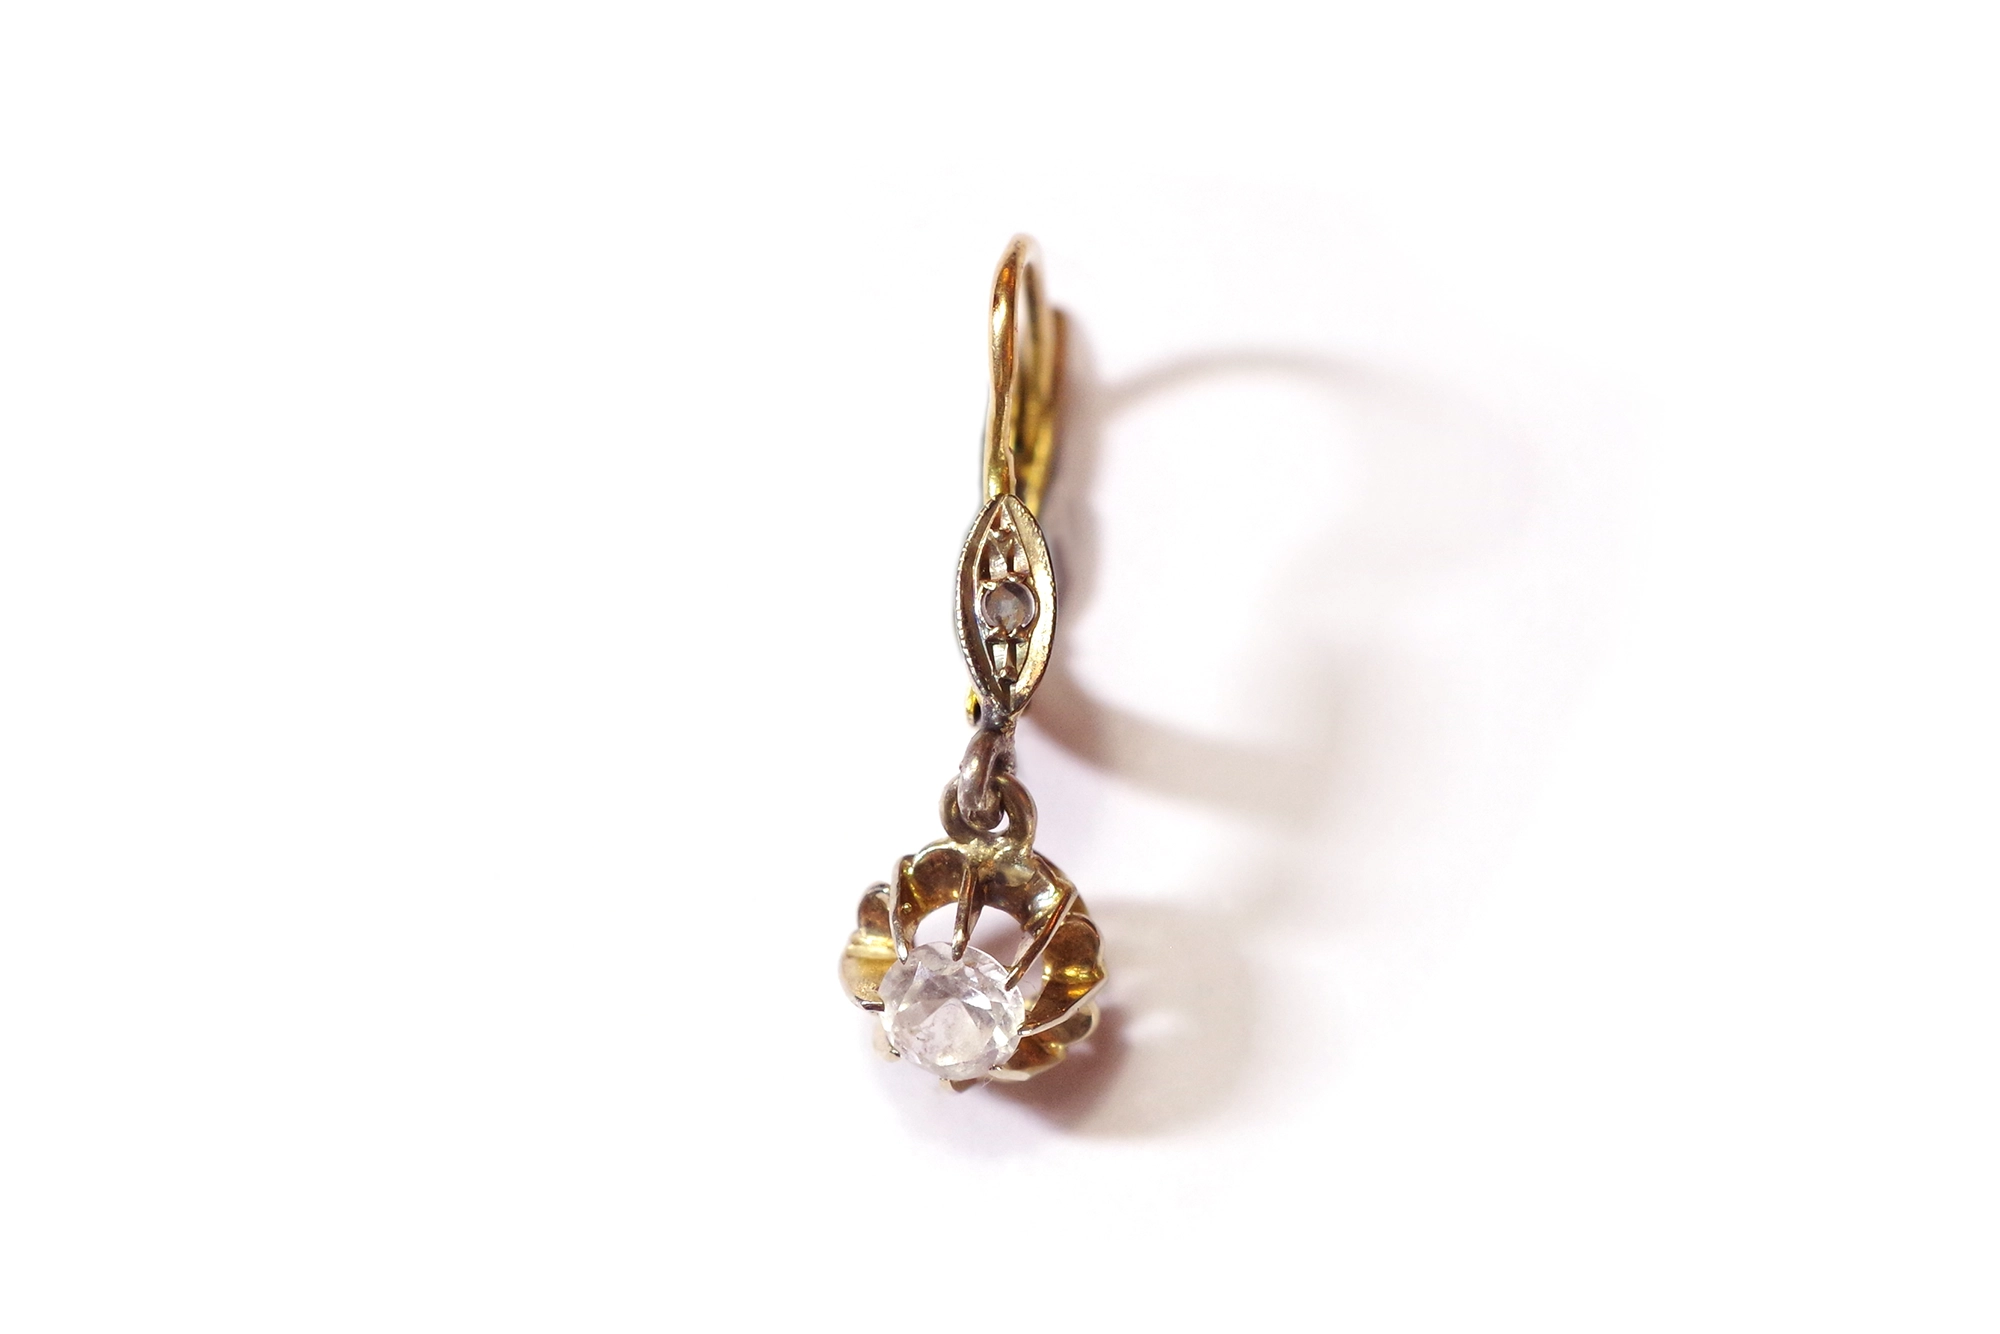 Antique single earring in gold